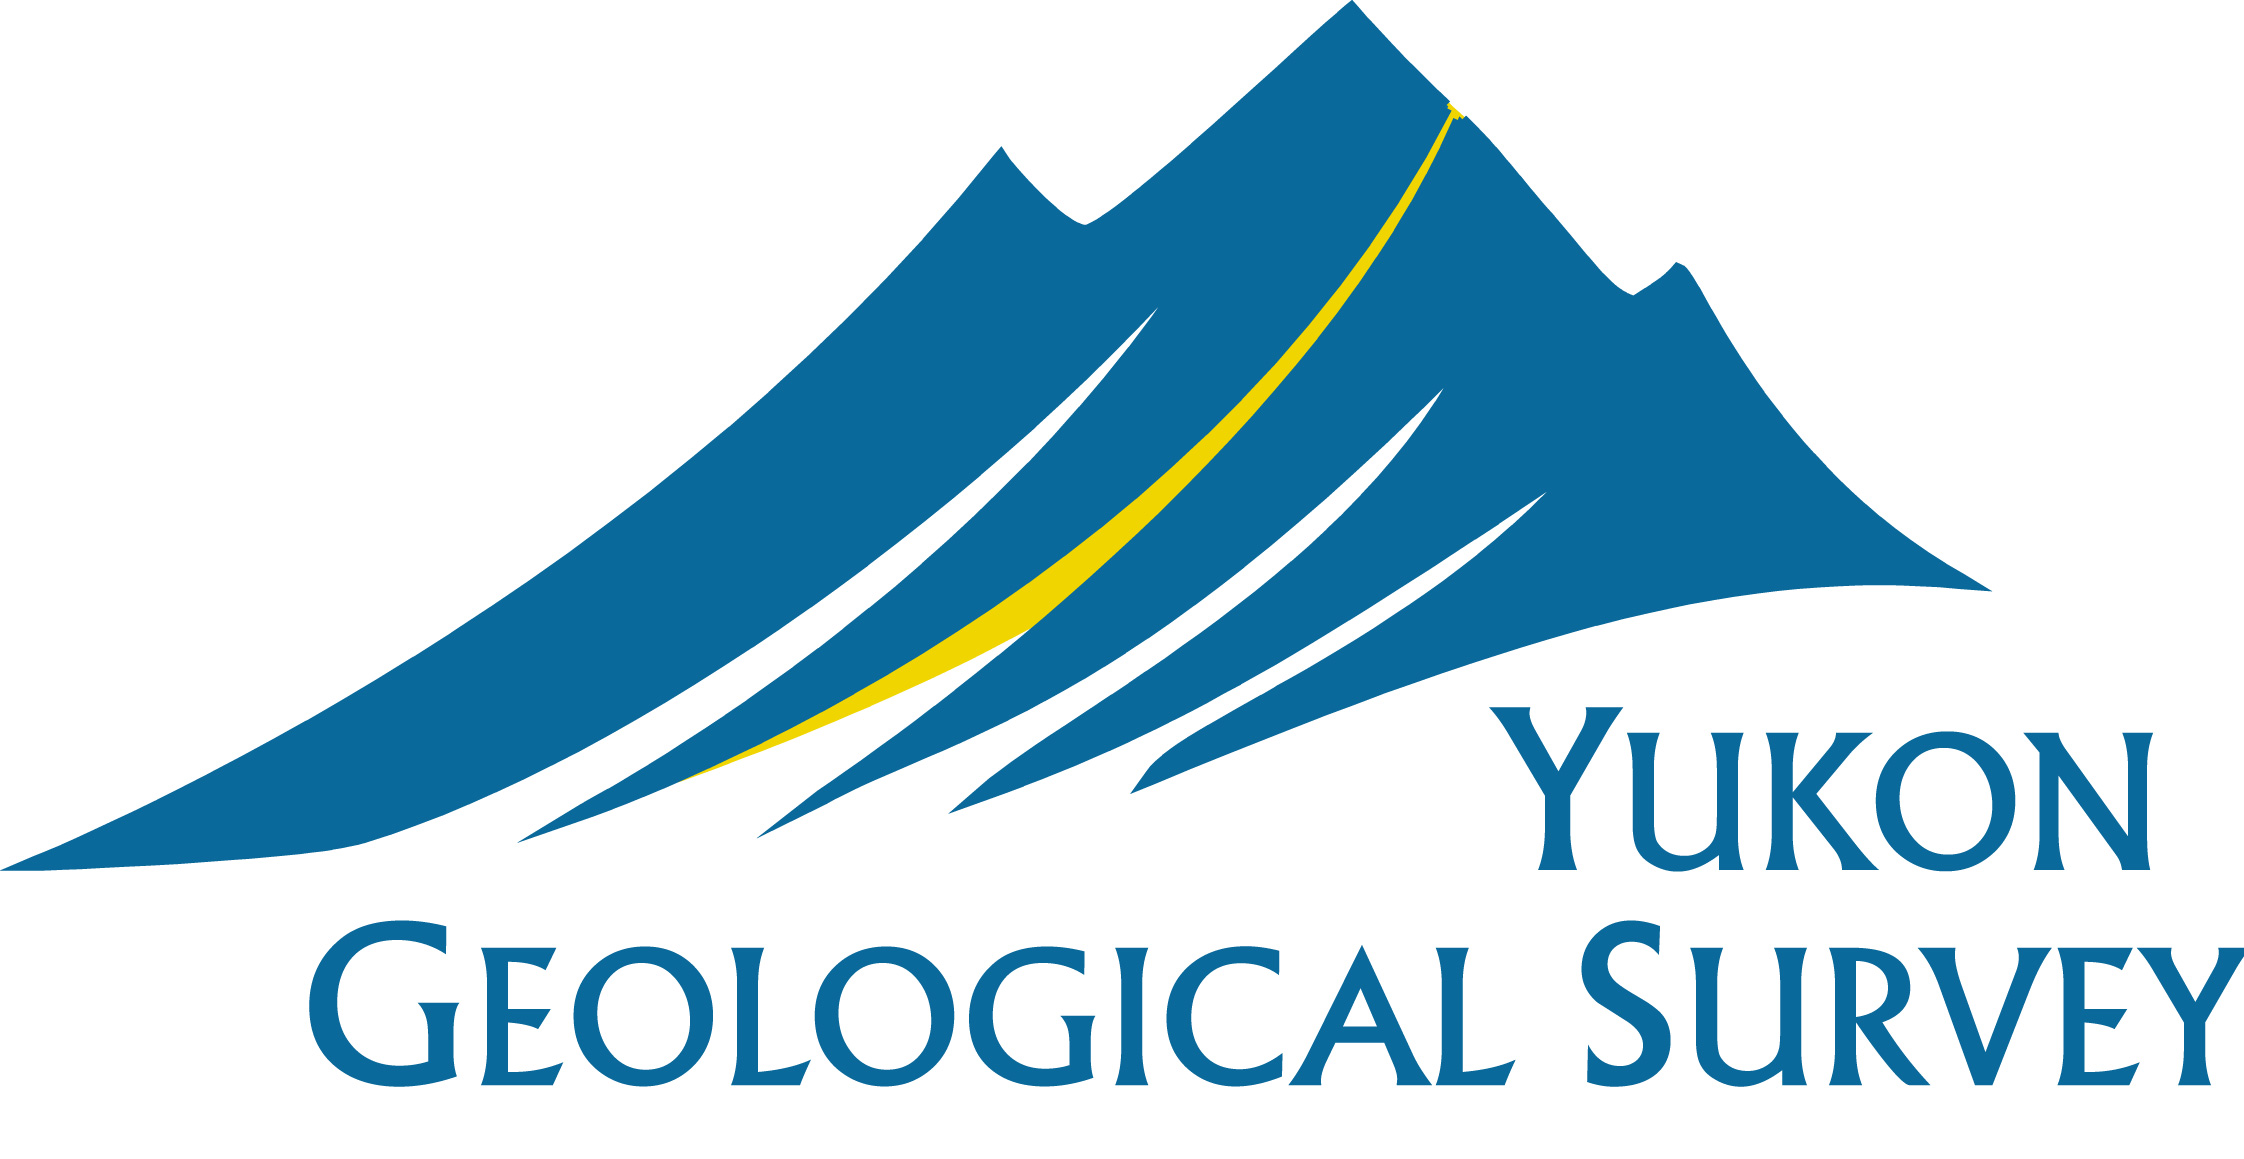 Yukon Geological Survey logo